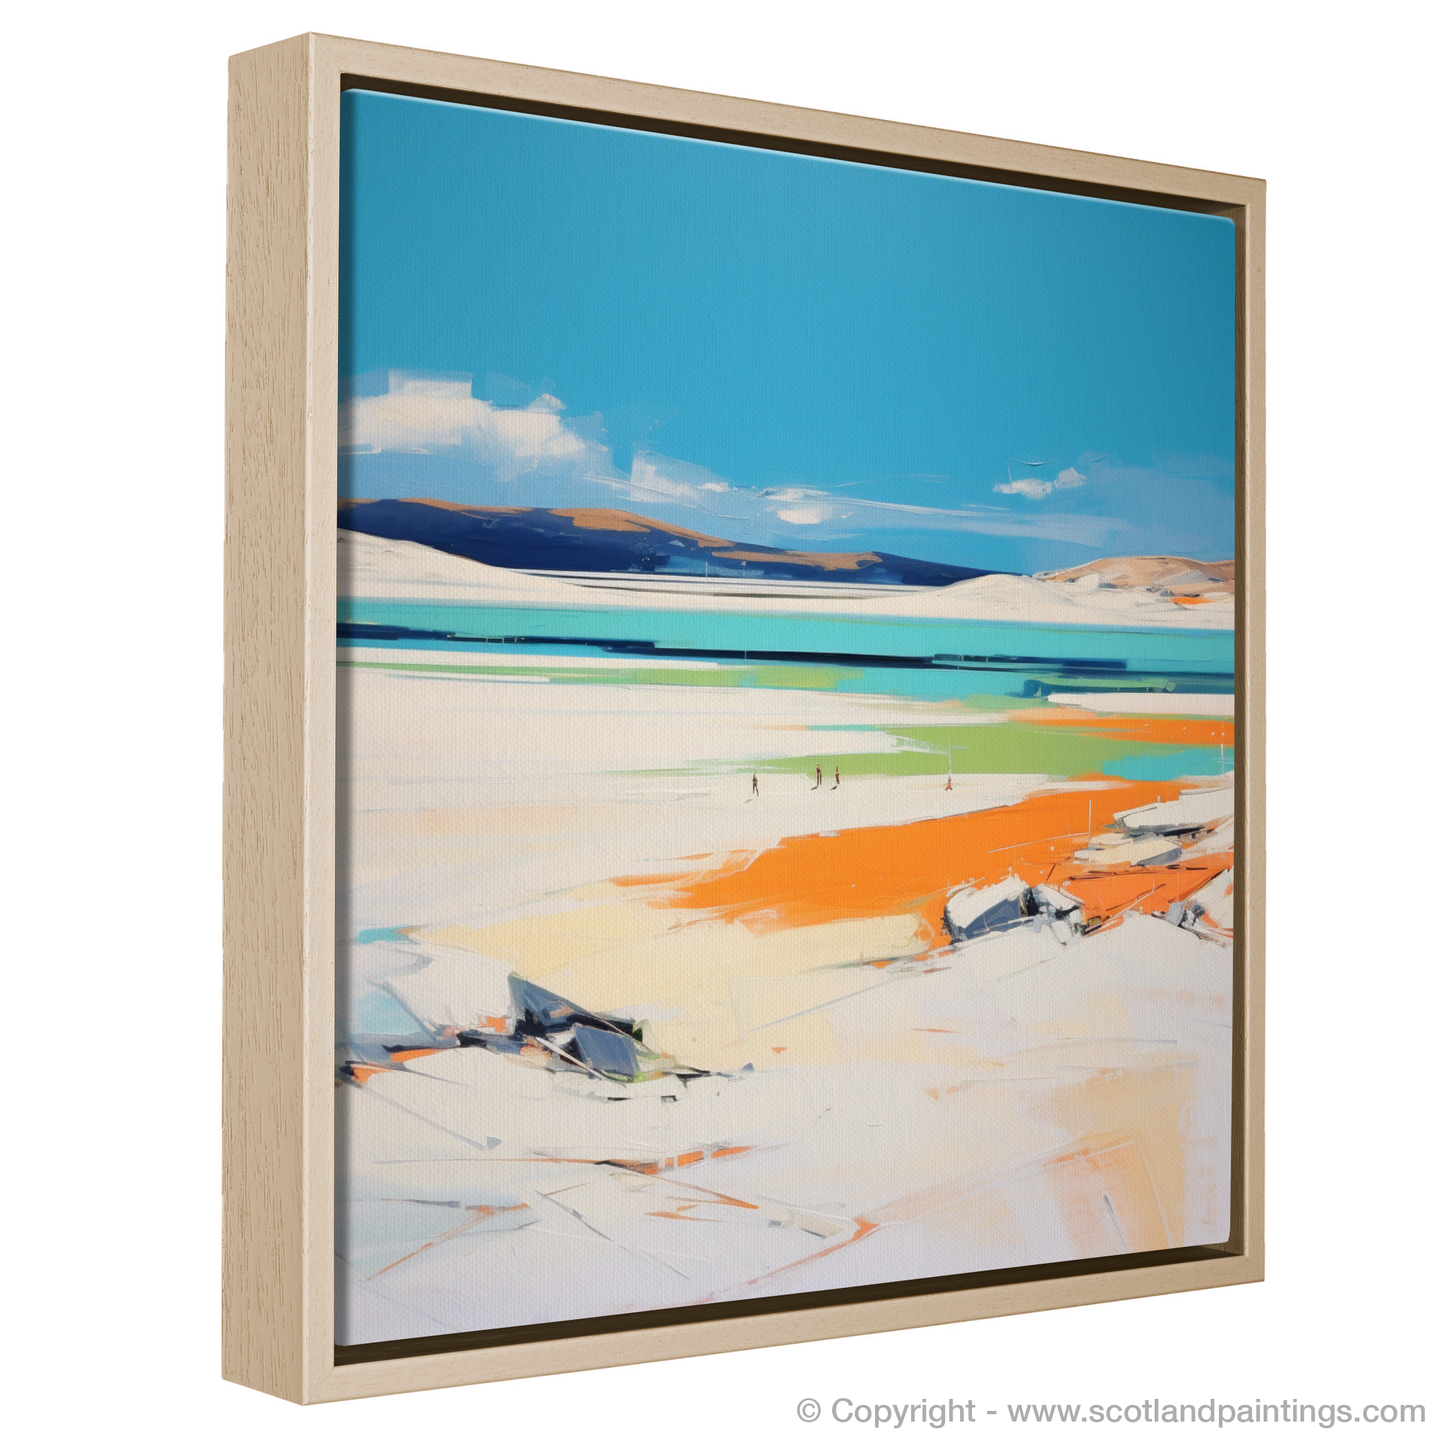 Painting and Art Print of Luskentyre Beach, Isle of Harris entitled "Luskentyre Beach: A Contemporary Tribute to Isle of Harris Splendour".